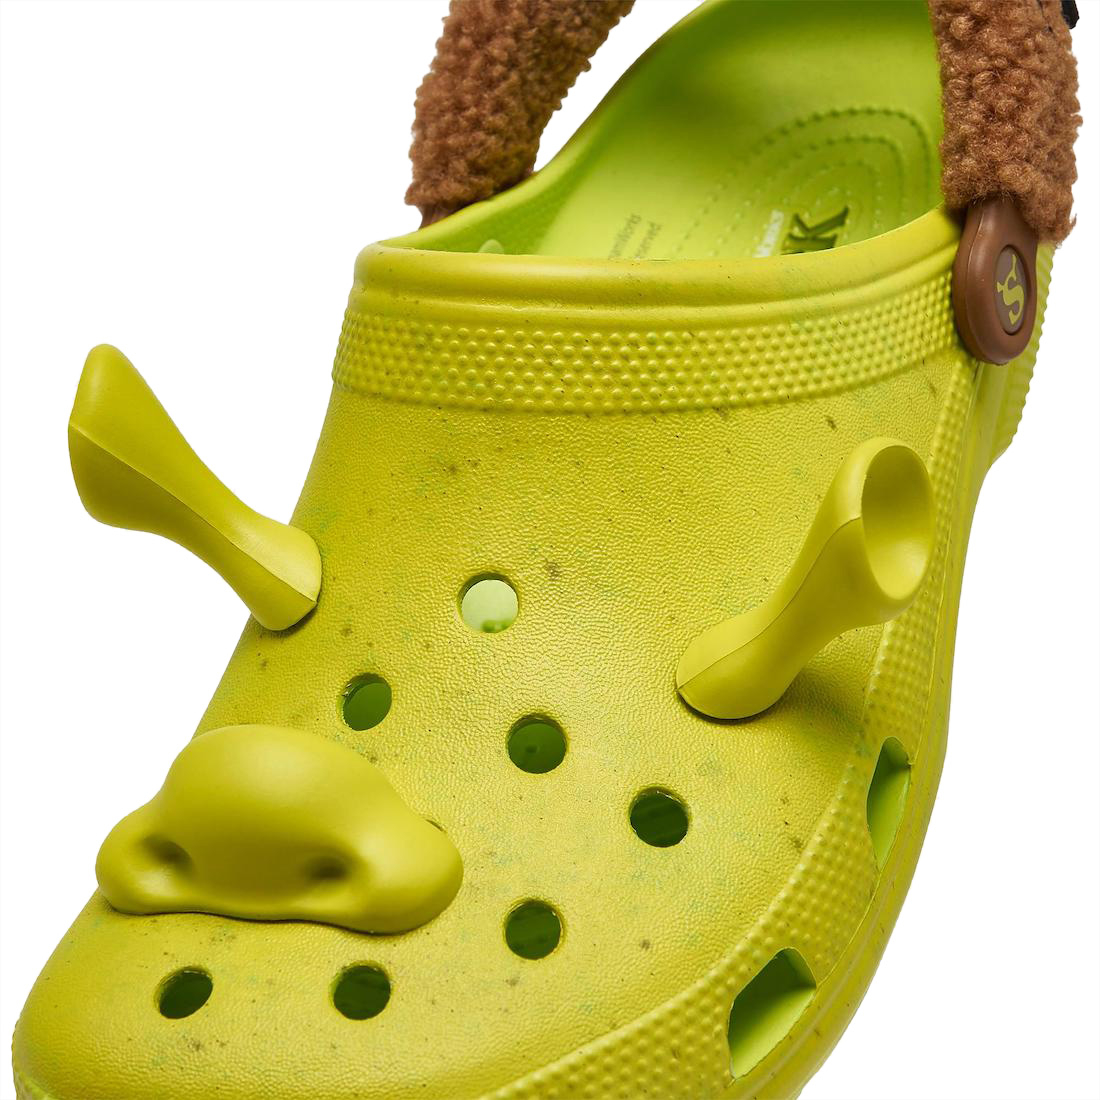 Crocs Clog x Shrek Croc Brand New with Box Size M8 W10 - In Hand